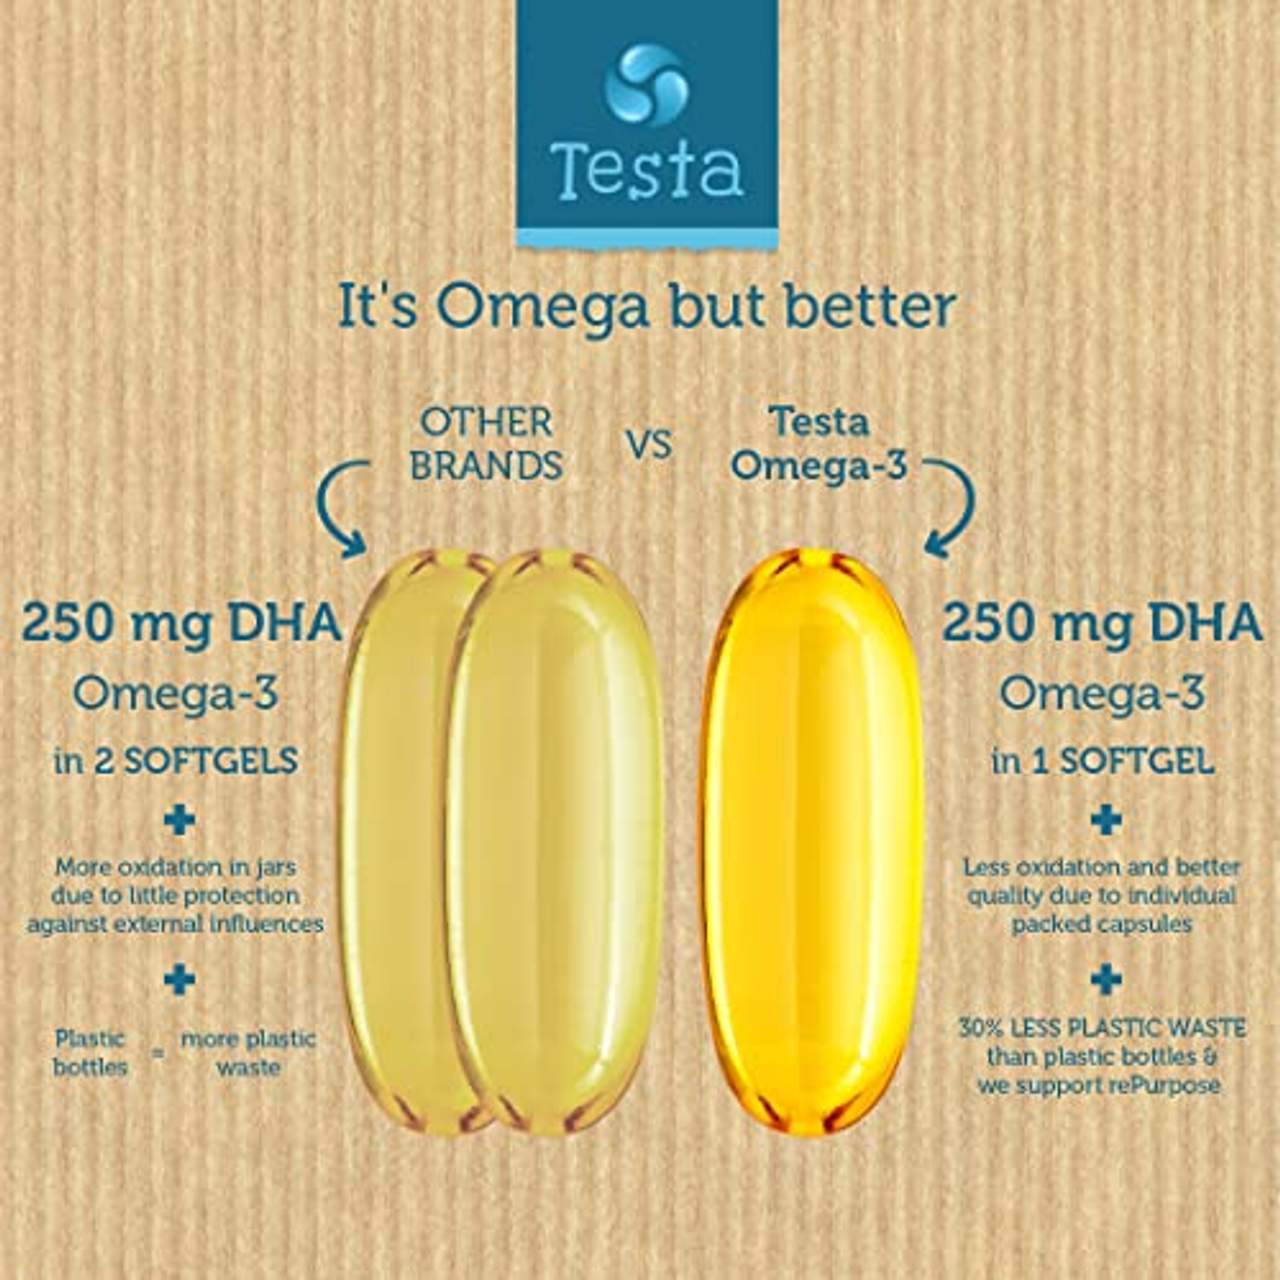 Testa Omega-3 Algenöl 250mg DHA